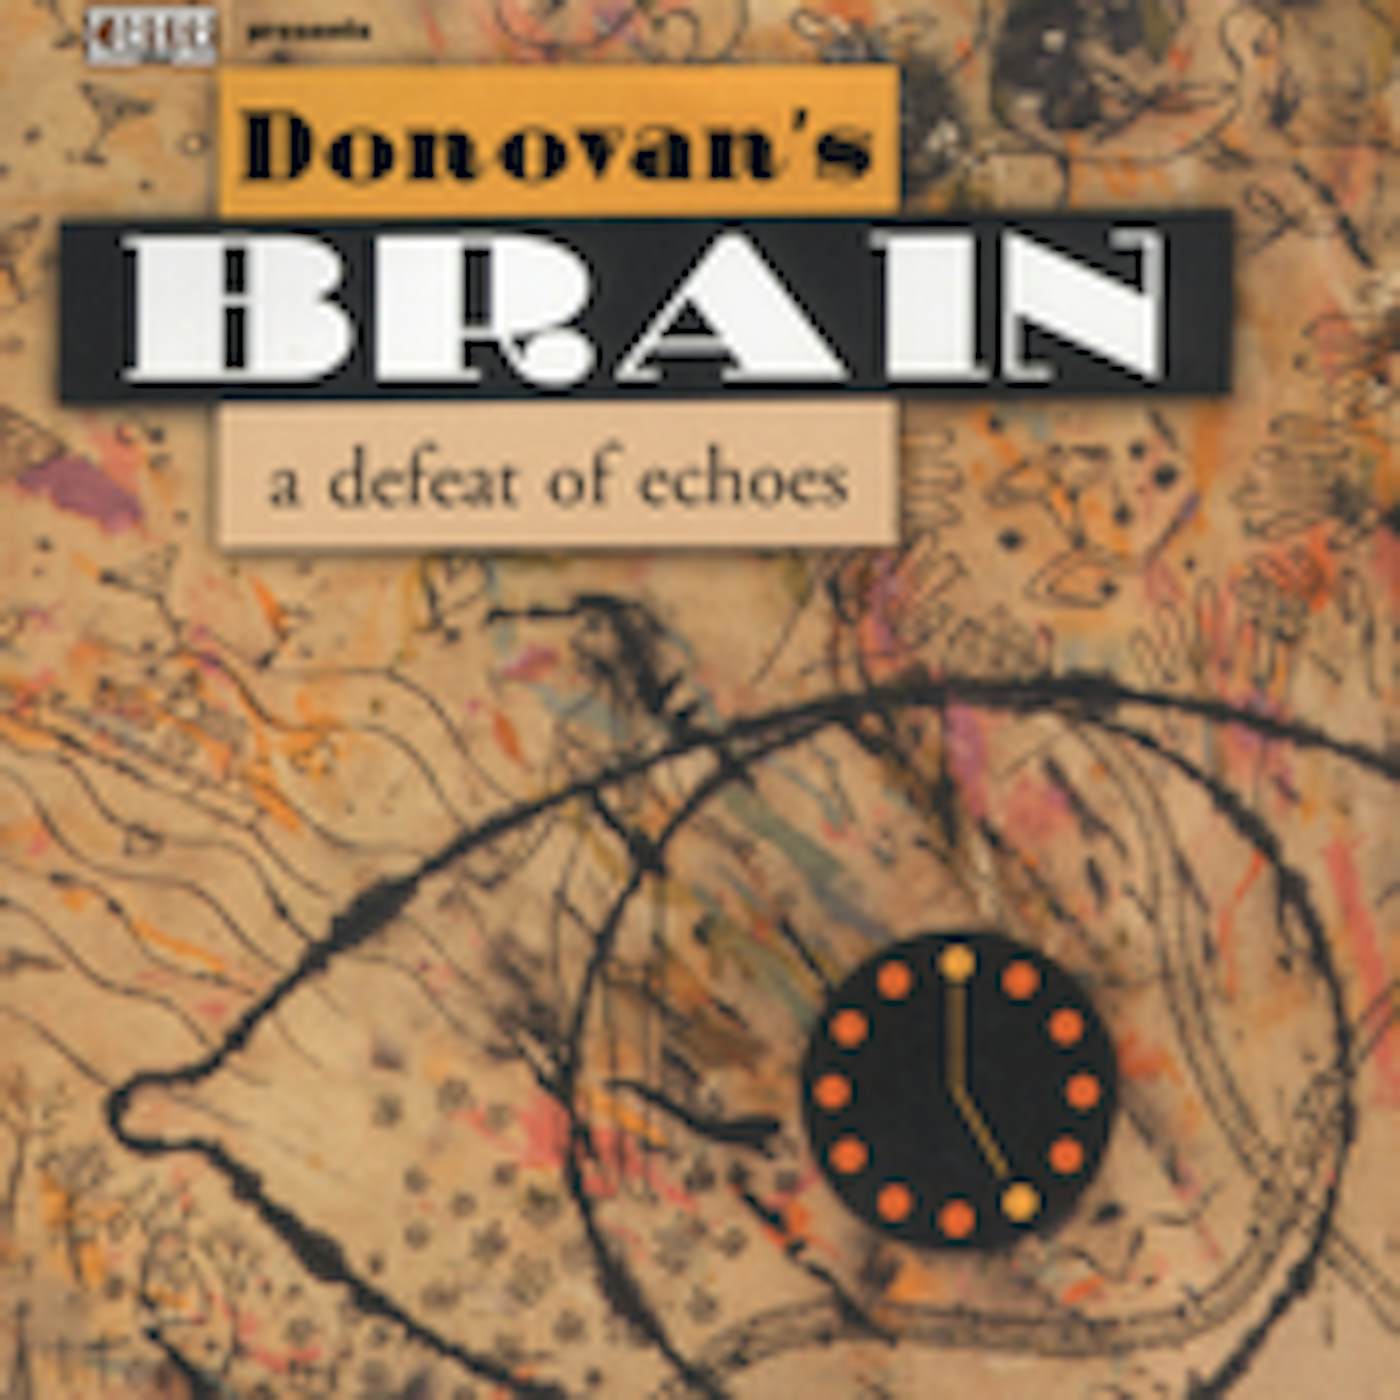 Donovan's Brain DEFEAT OF ECHOES CD